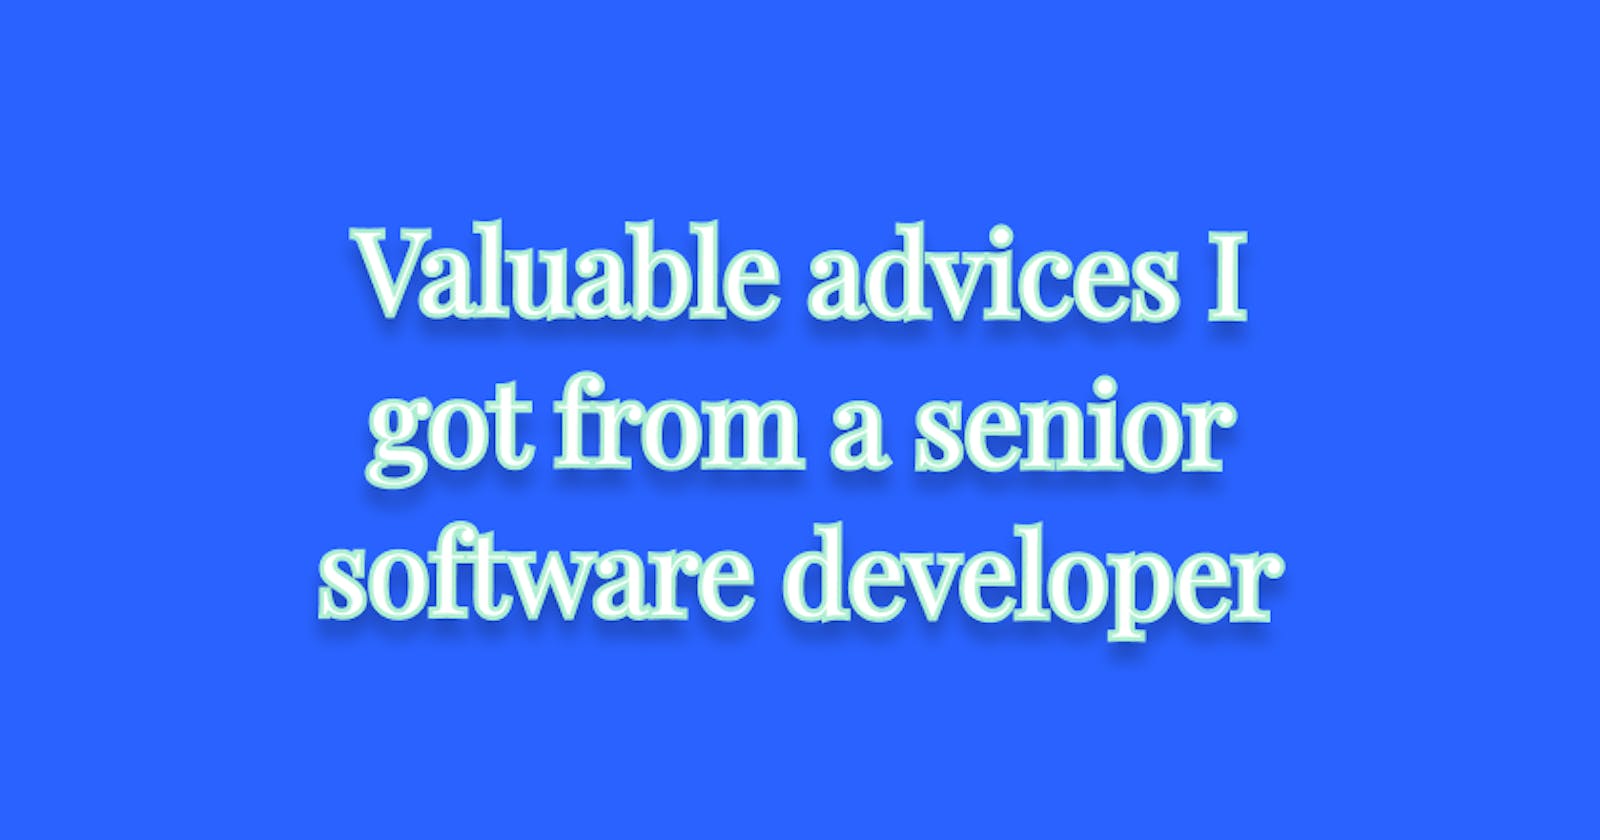 Valuable advices I got from a senior software developer